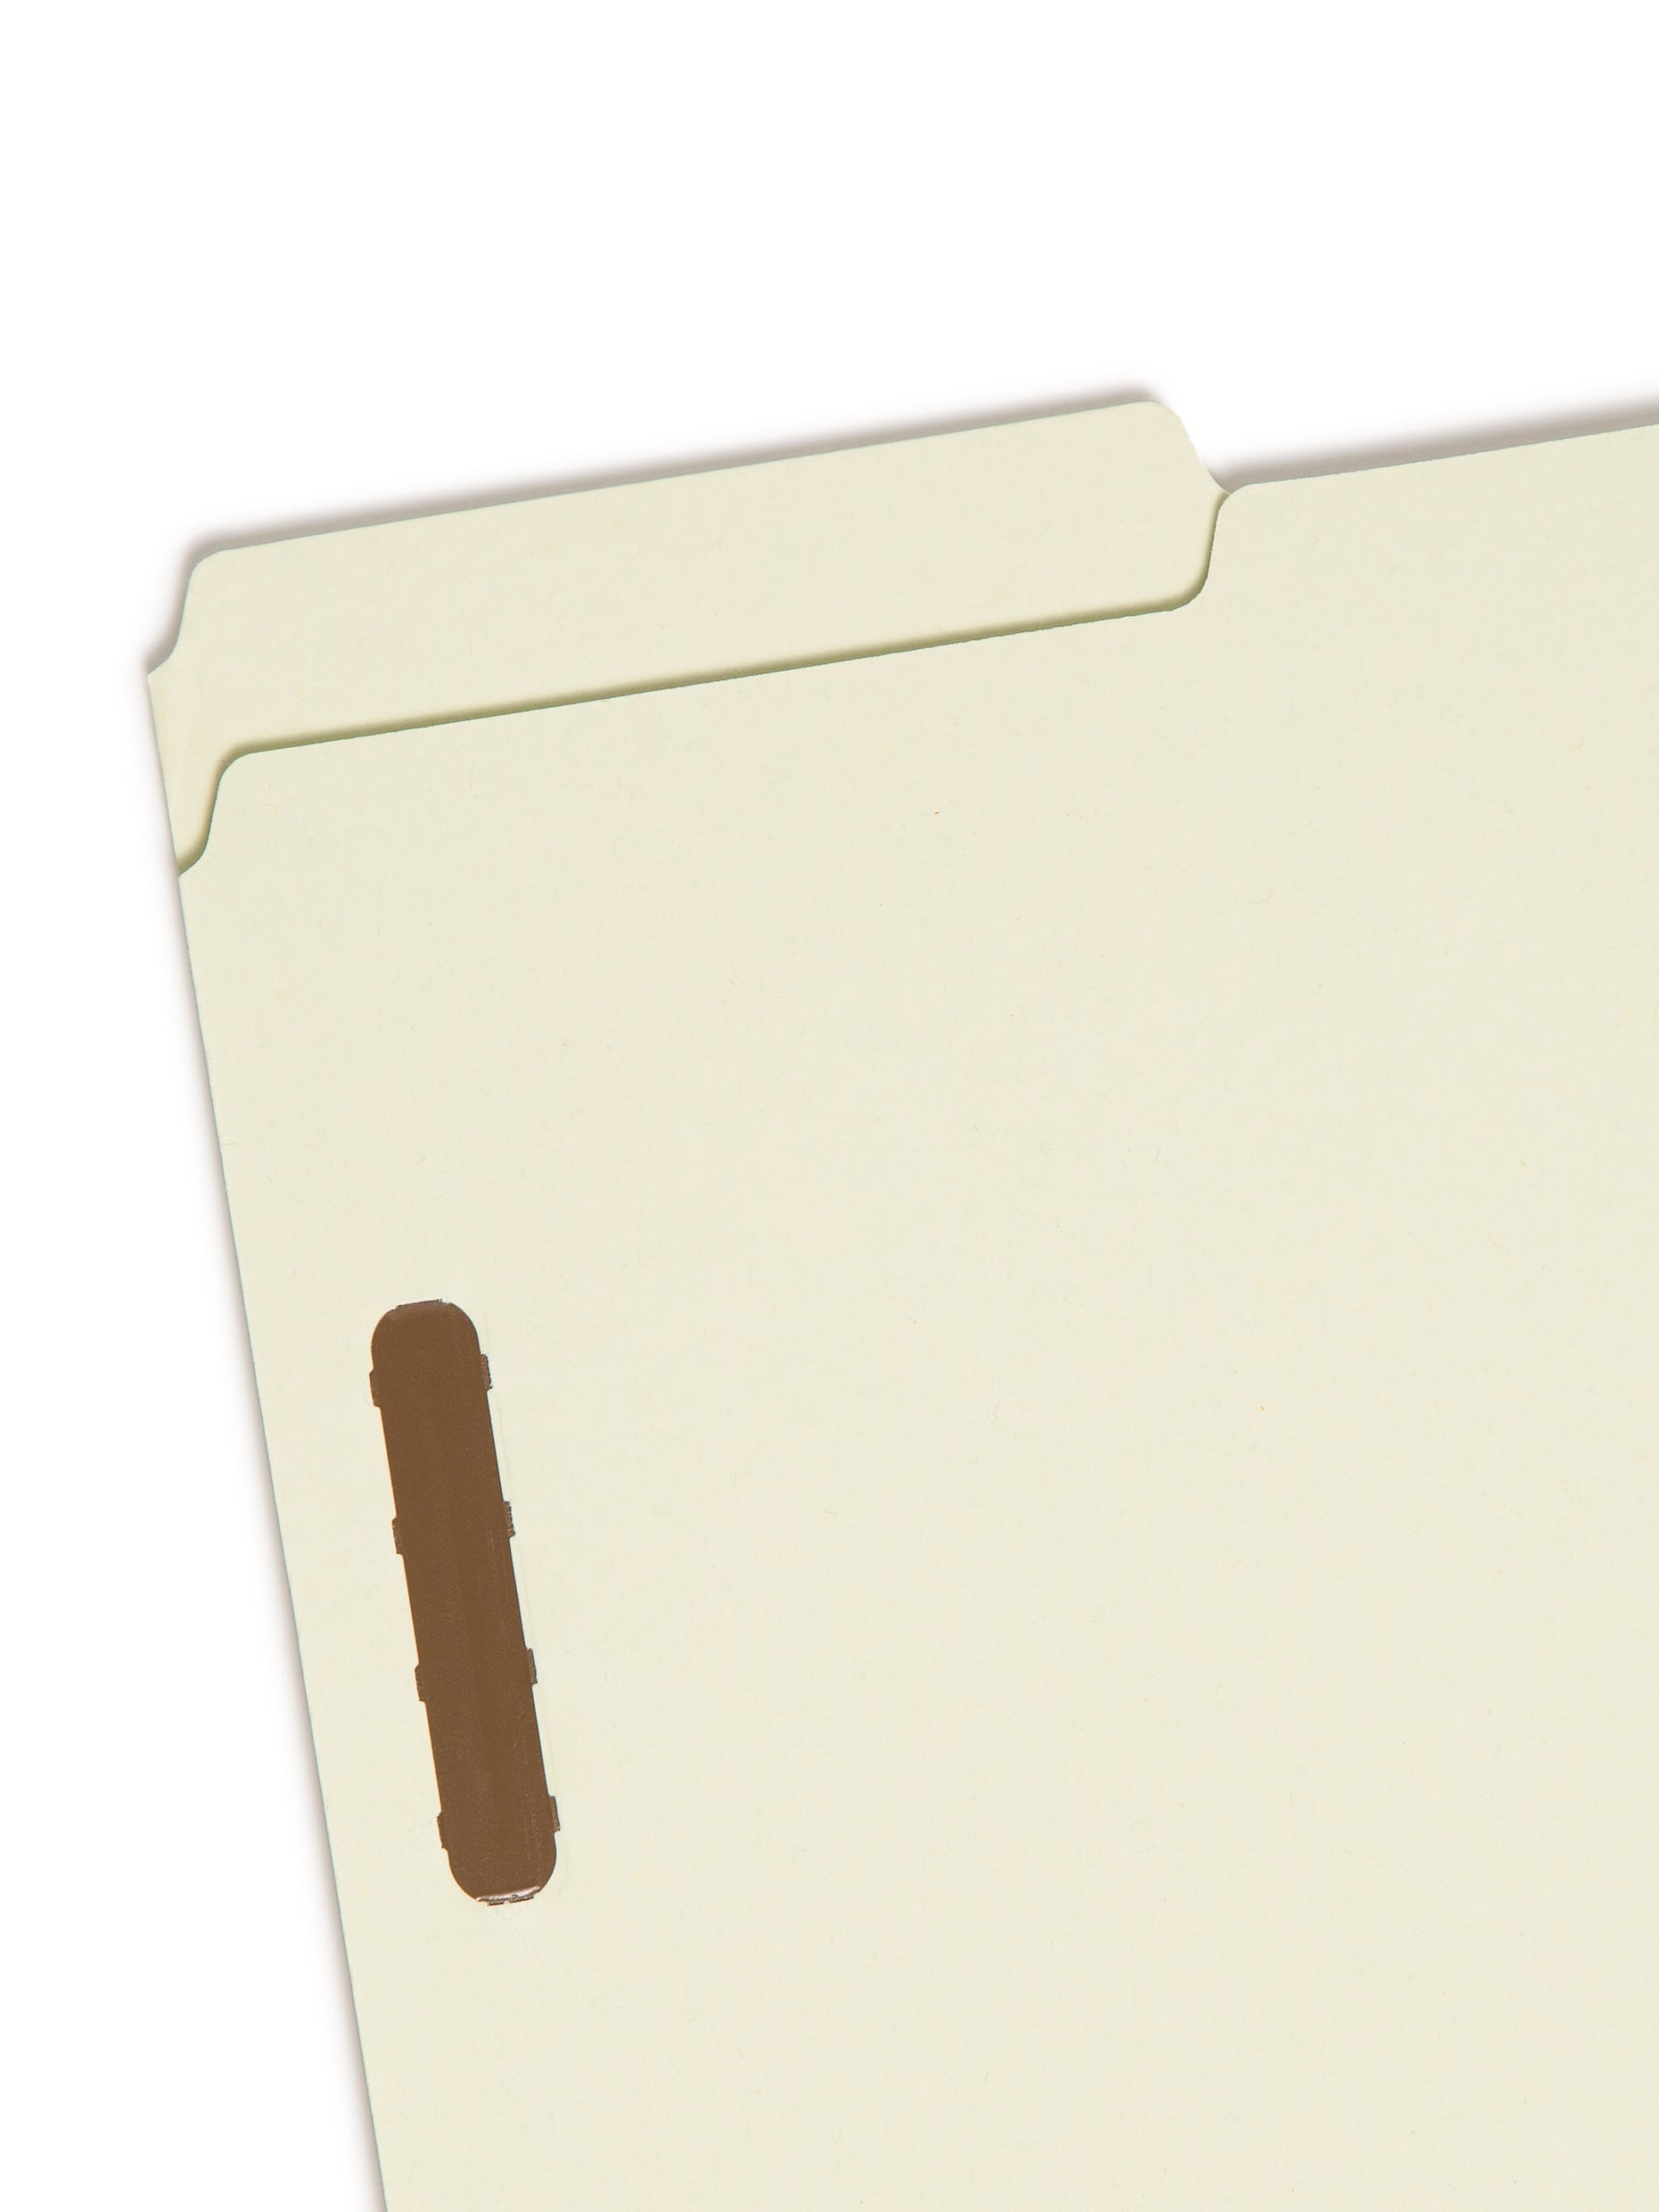 Pressboard Fastener File Folders, 1 inch Expansion, Gray/Green Color, Legal Size, 